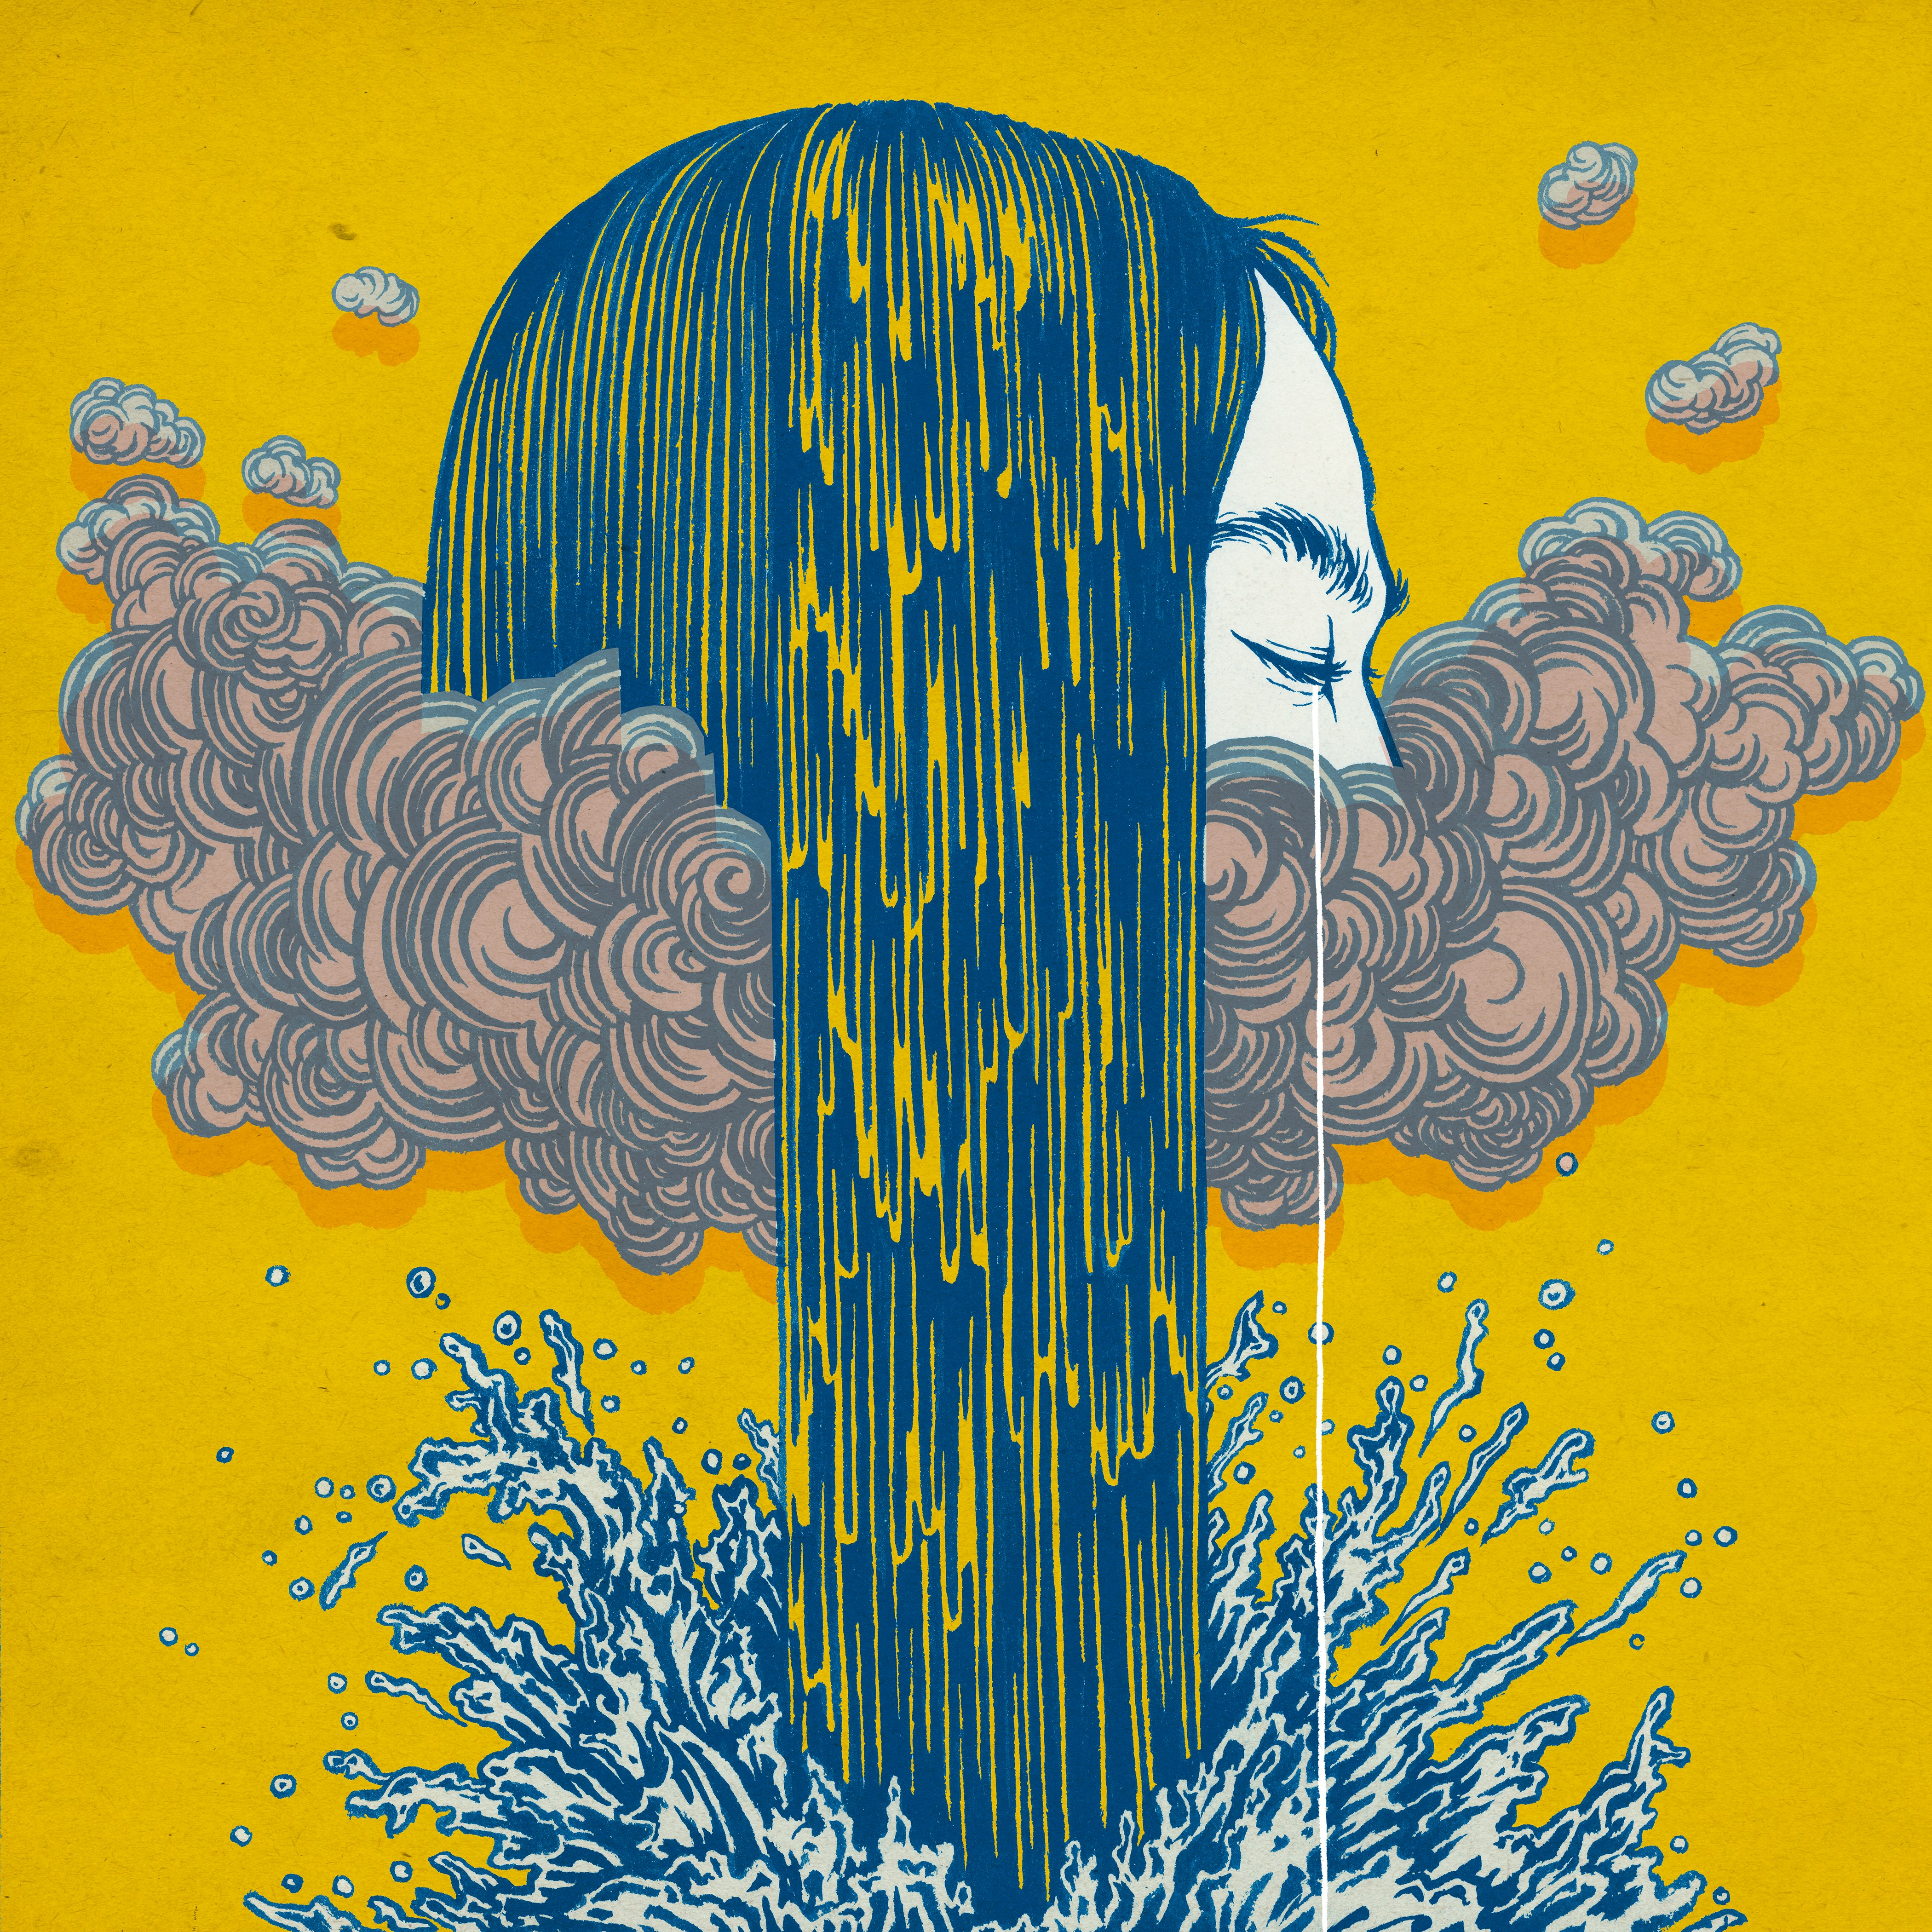 'Emergence' by Yuko Shimizu